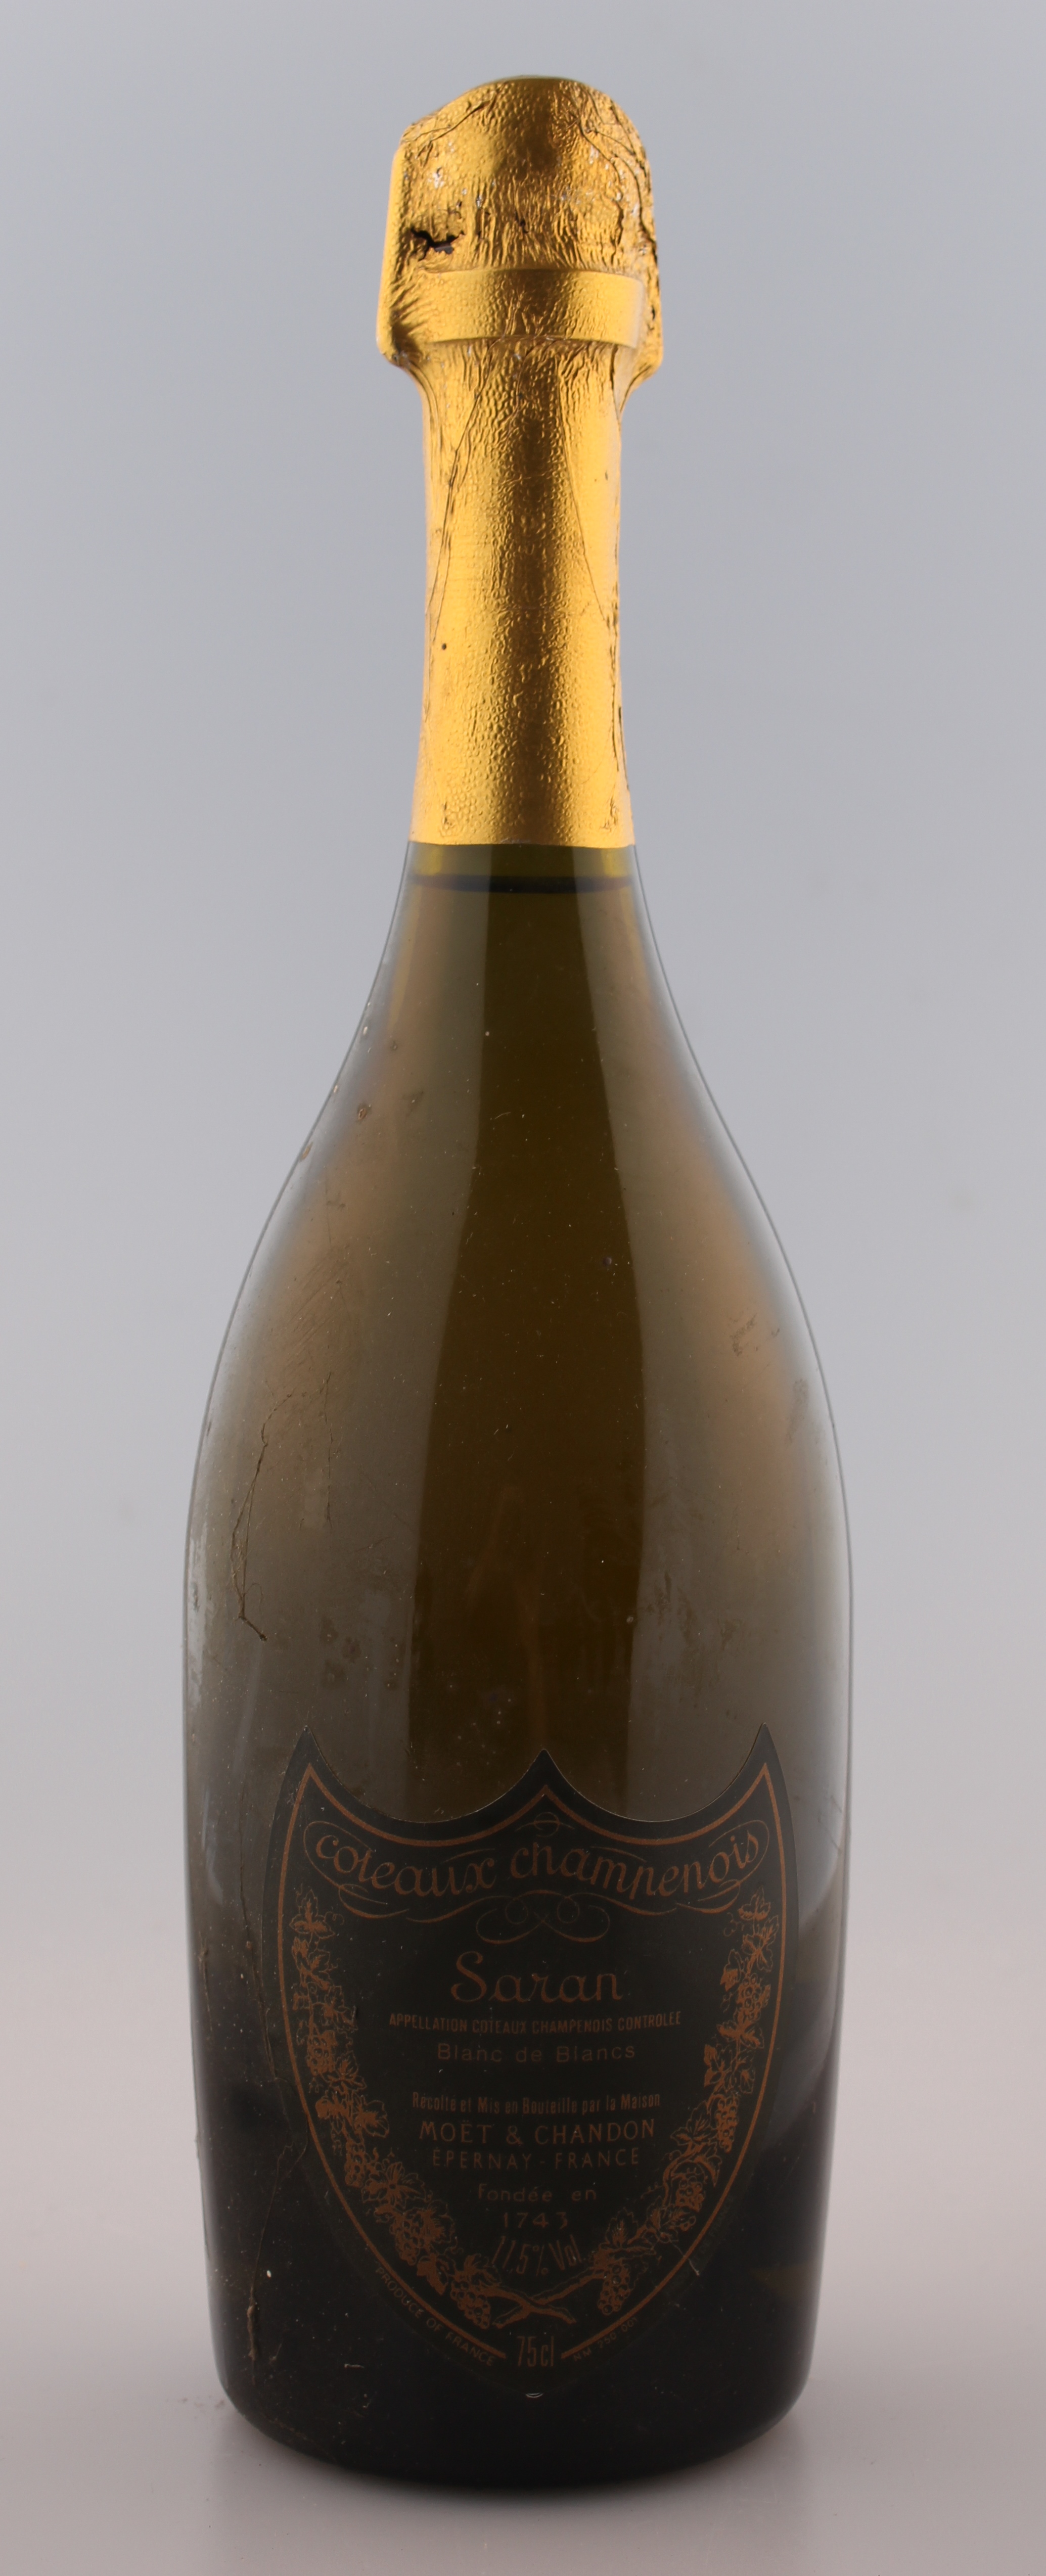 A bottle of Moet & Chandon Coteaux Champenois Saran Blanc de Blancs, Champagne, France, chardonnay.